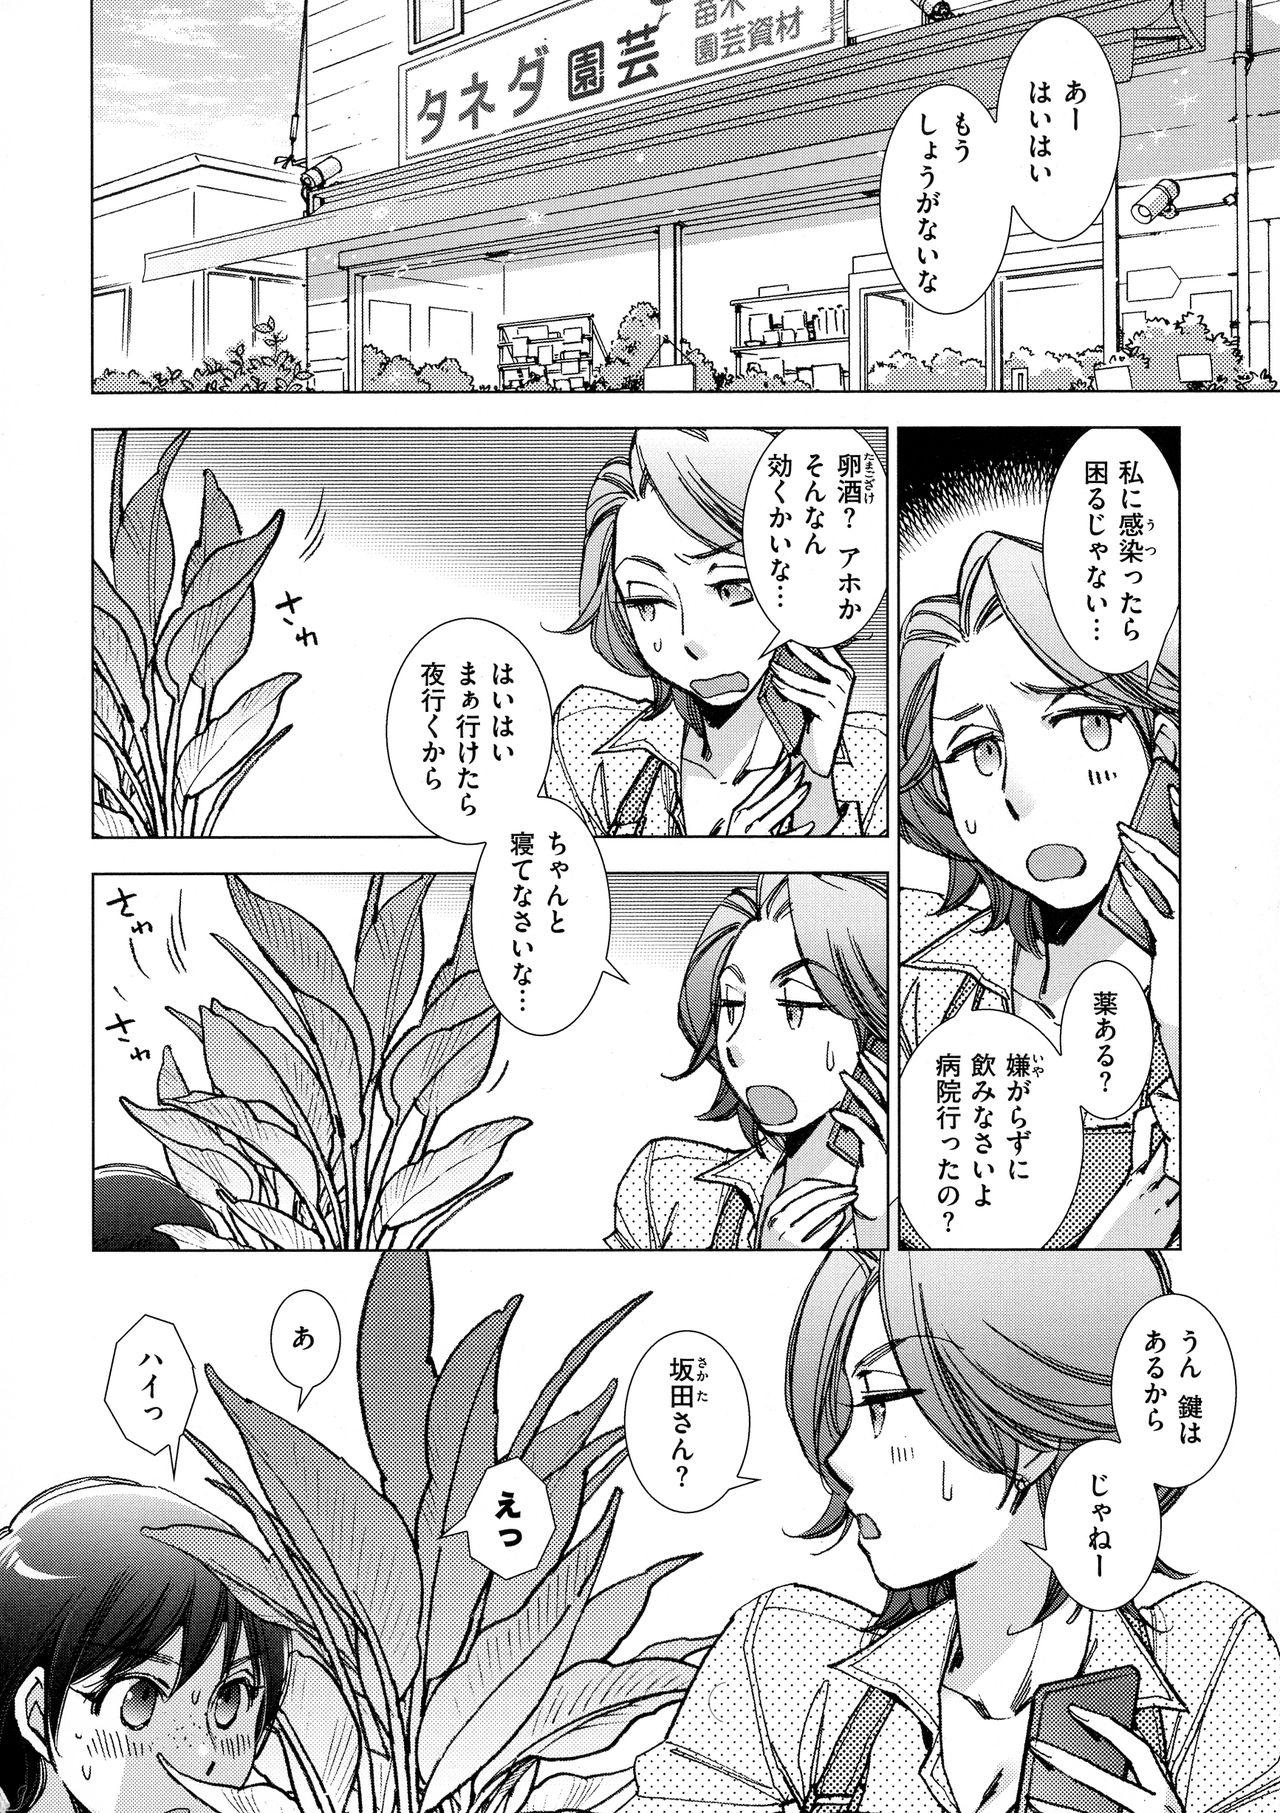 Classroom Engeiten no Yasashii Koibito - Sweetheart in the gardening shop Curious - Page 8